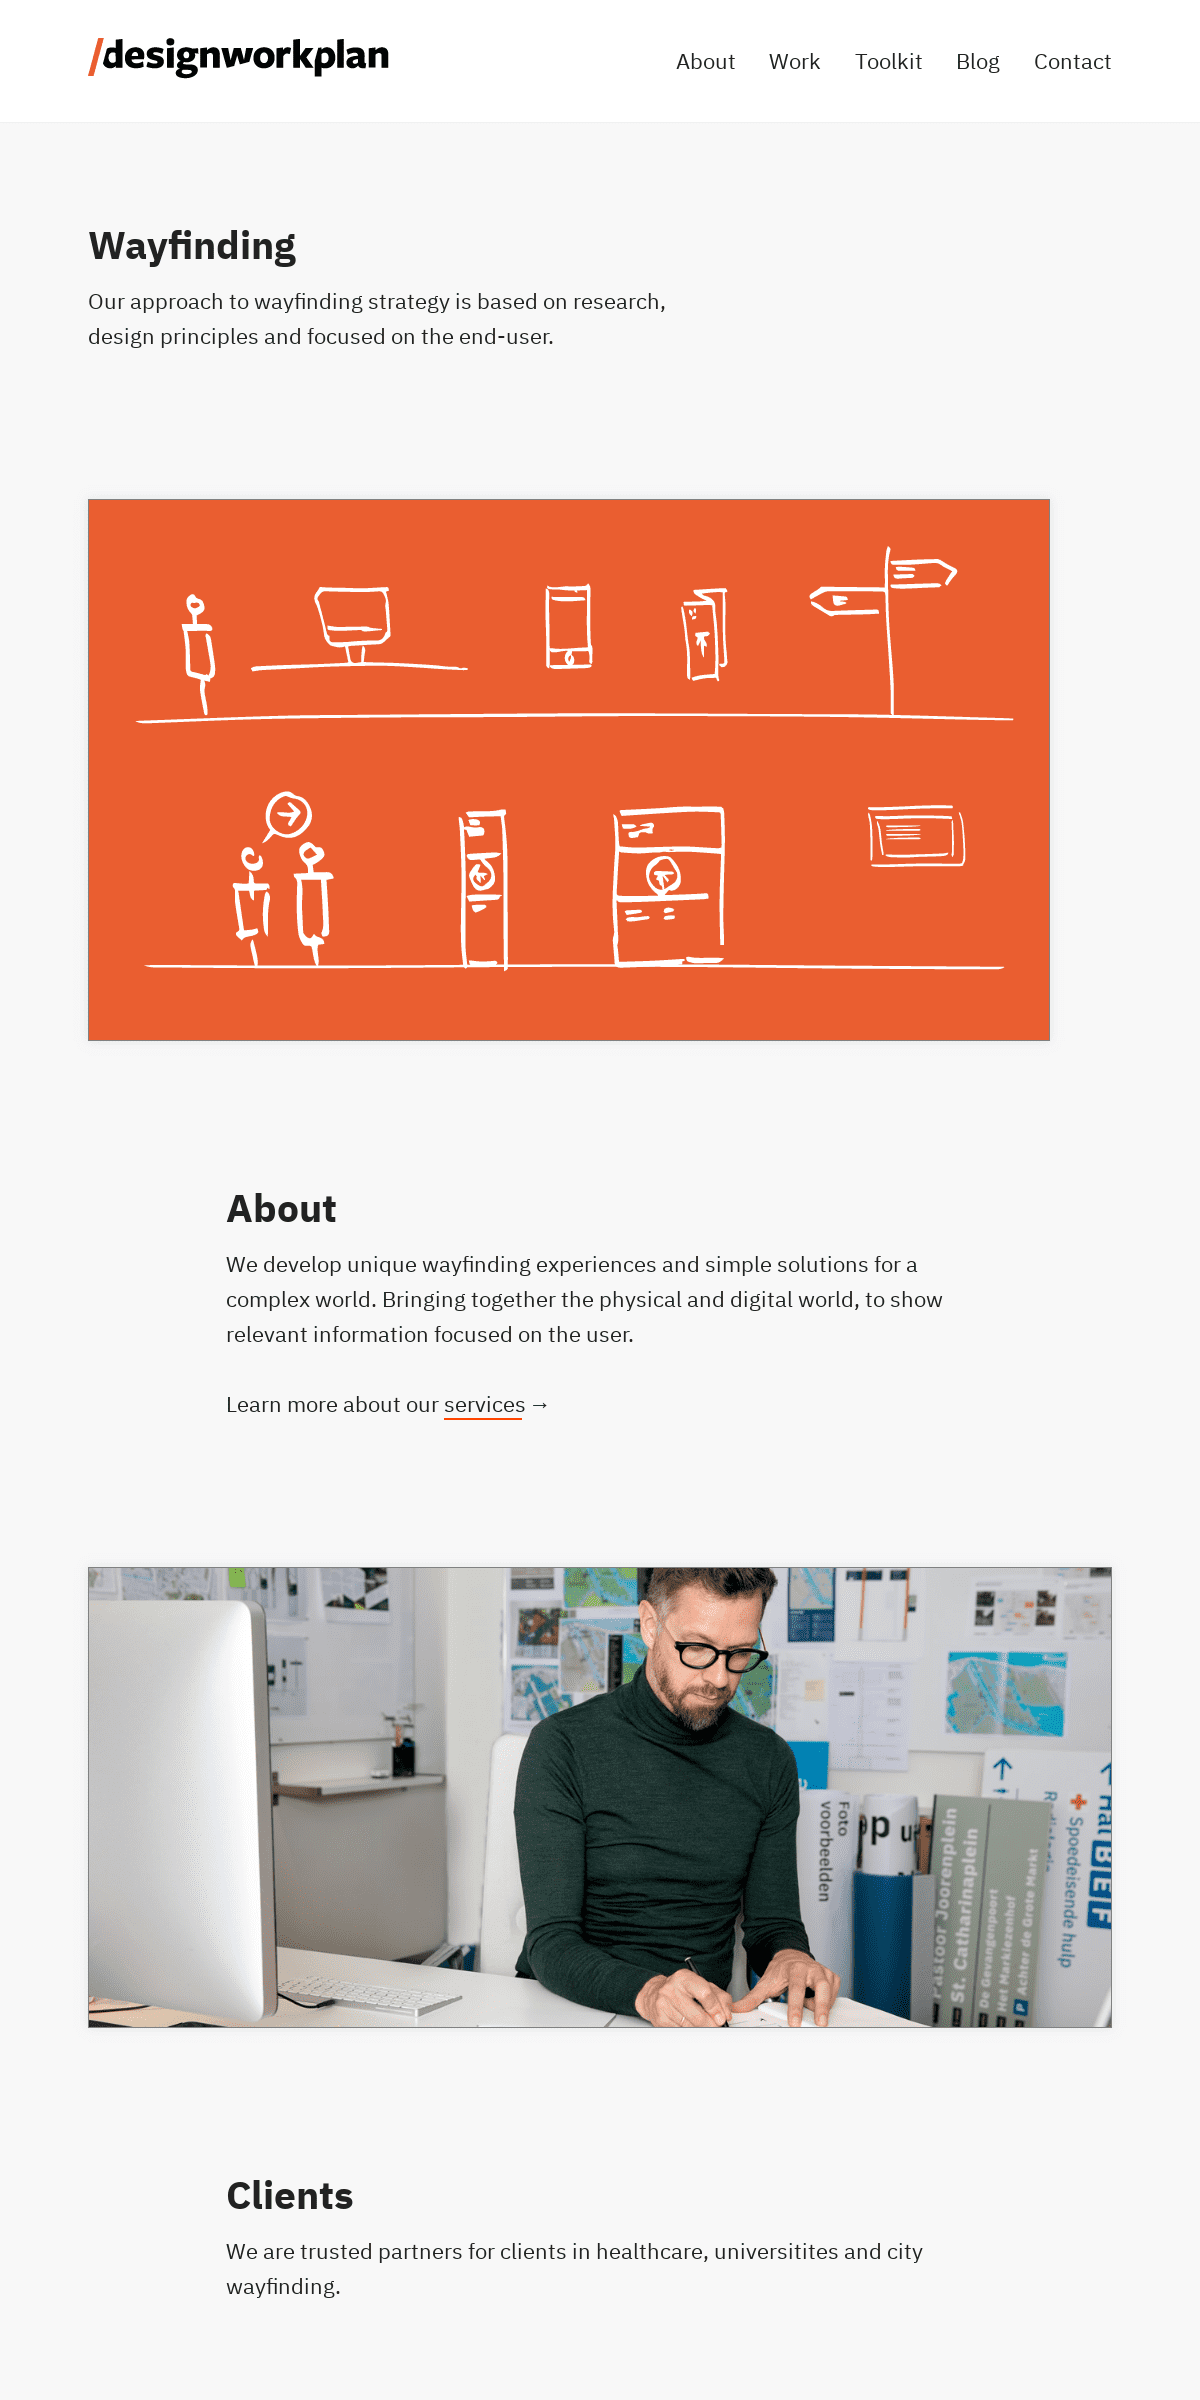 A complete backup of designworkplan.com